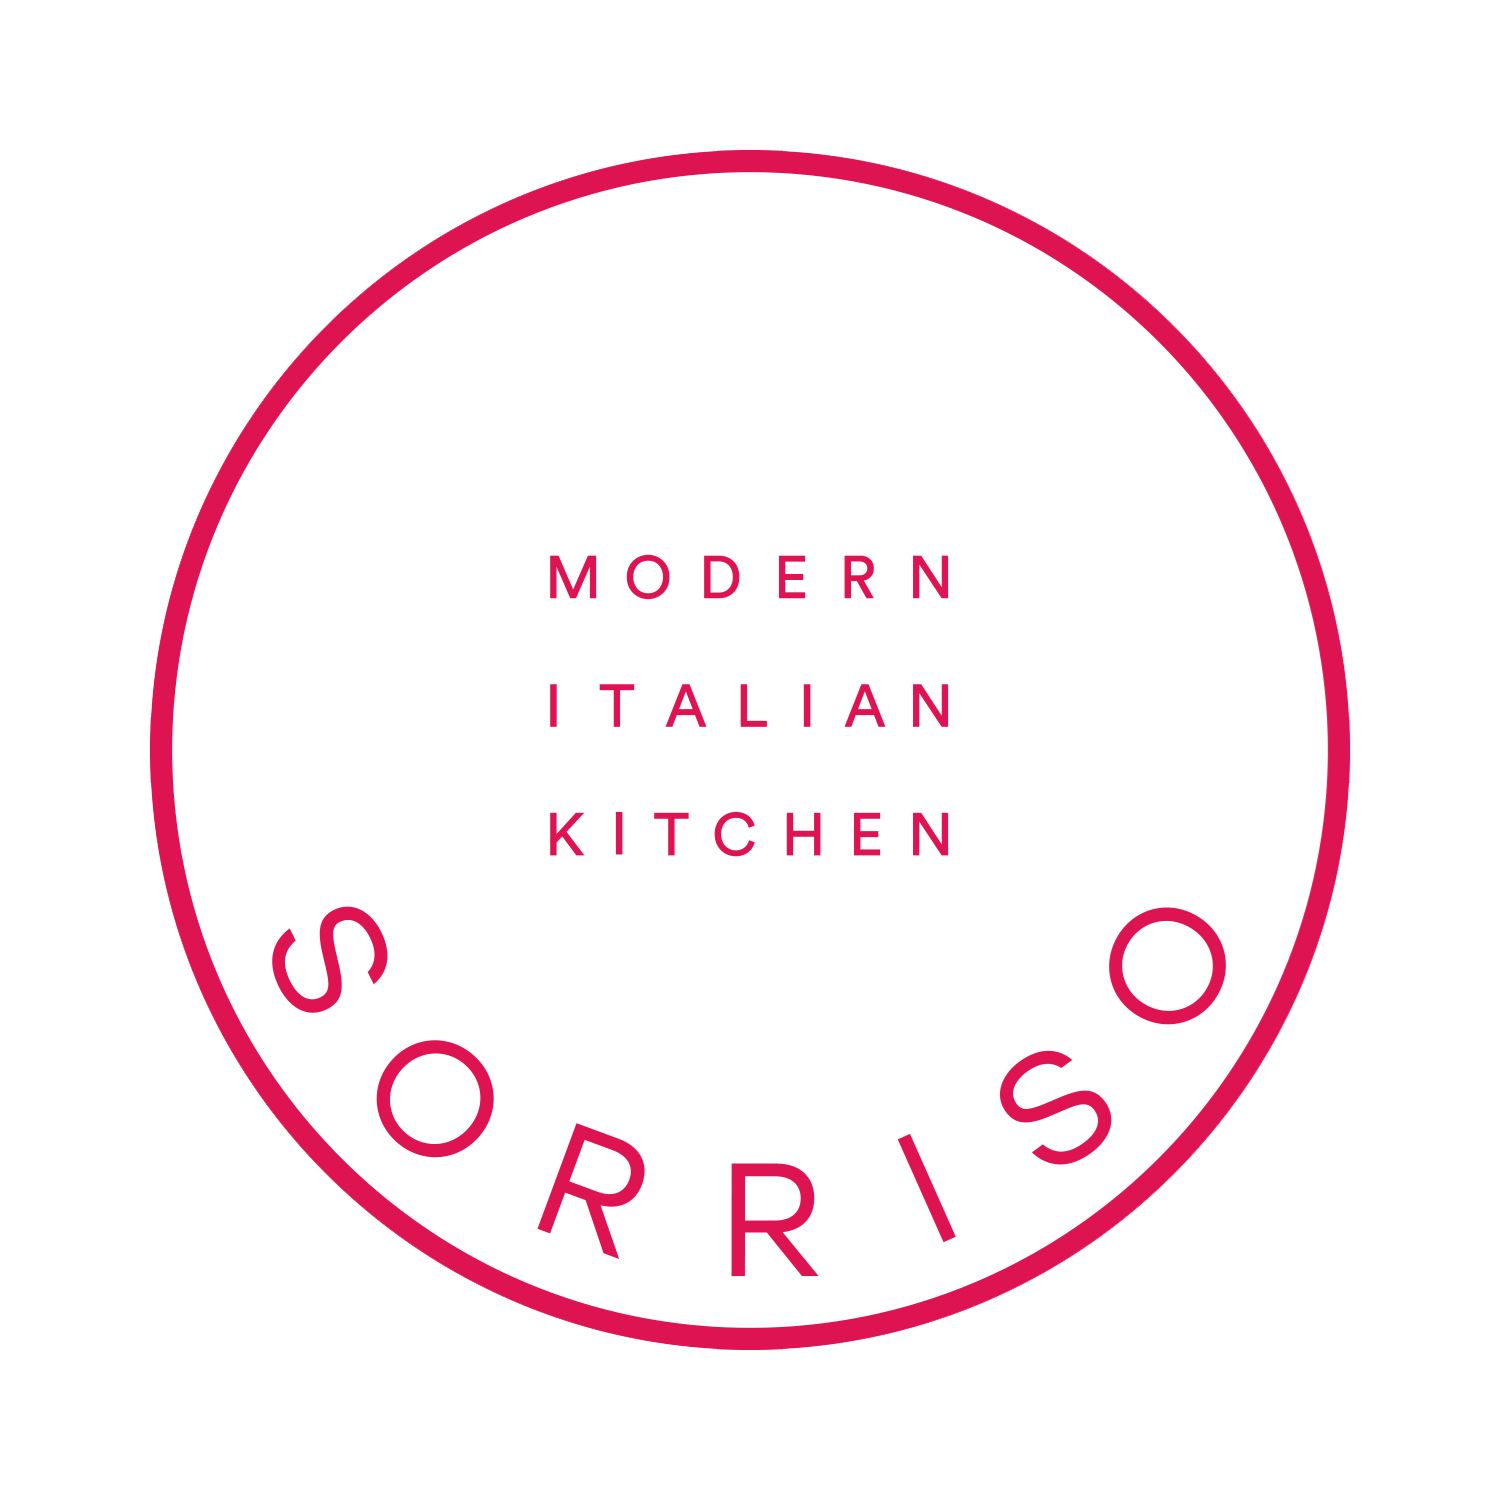 Sorriso Modern Italian Kitchen